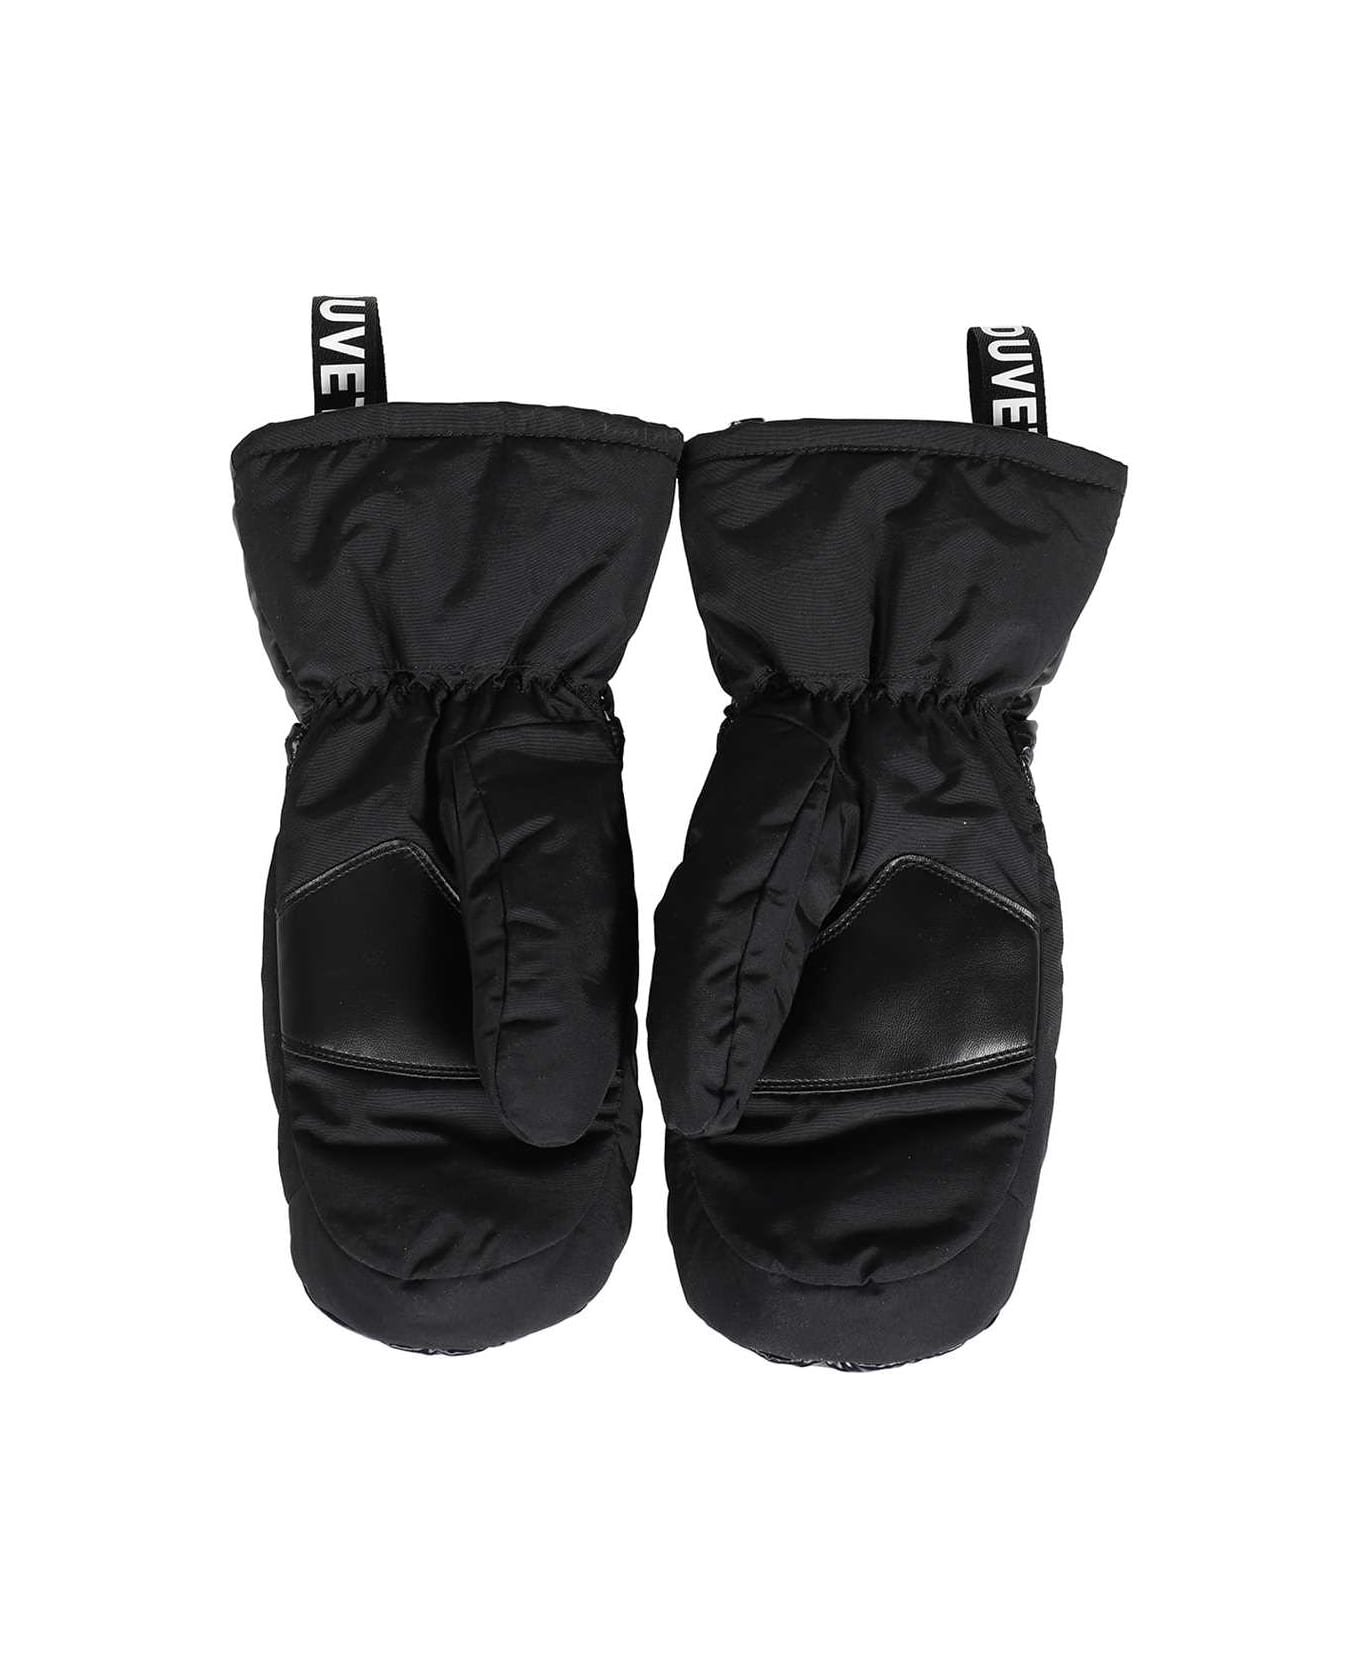 Duvetica Gloves - black 手袋